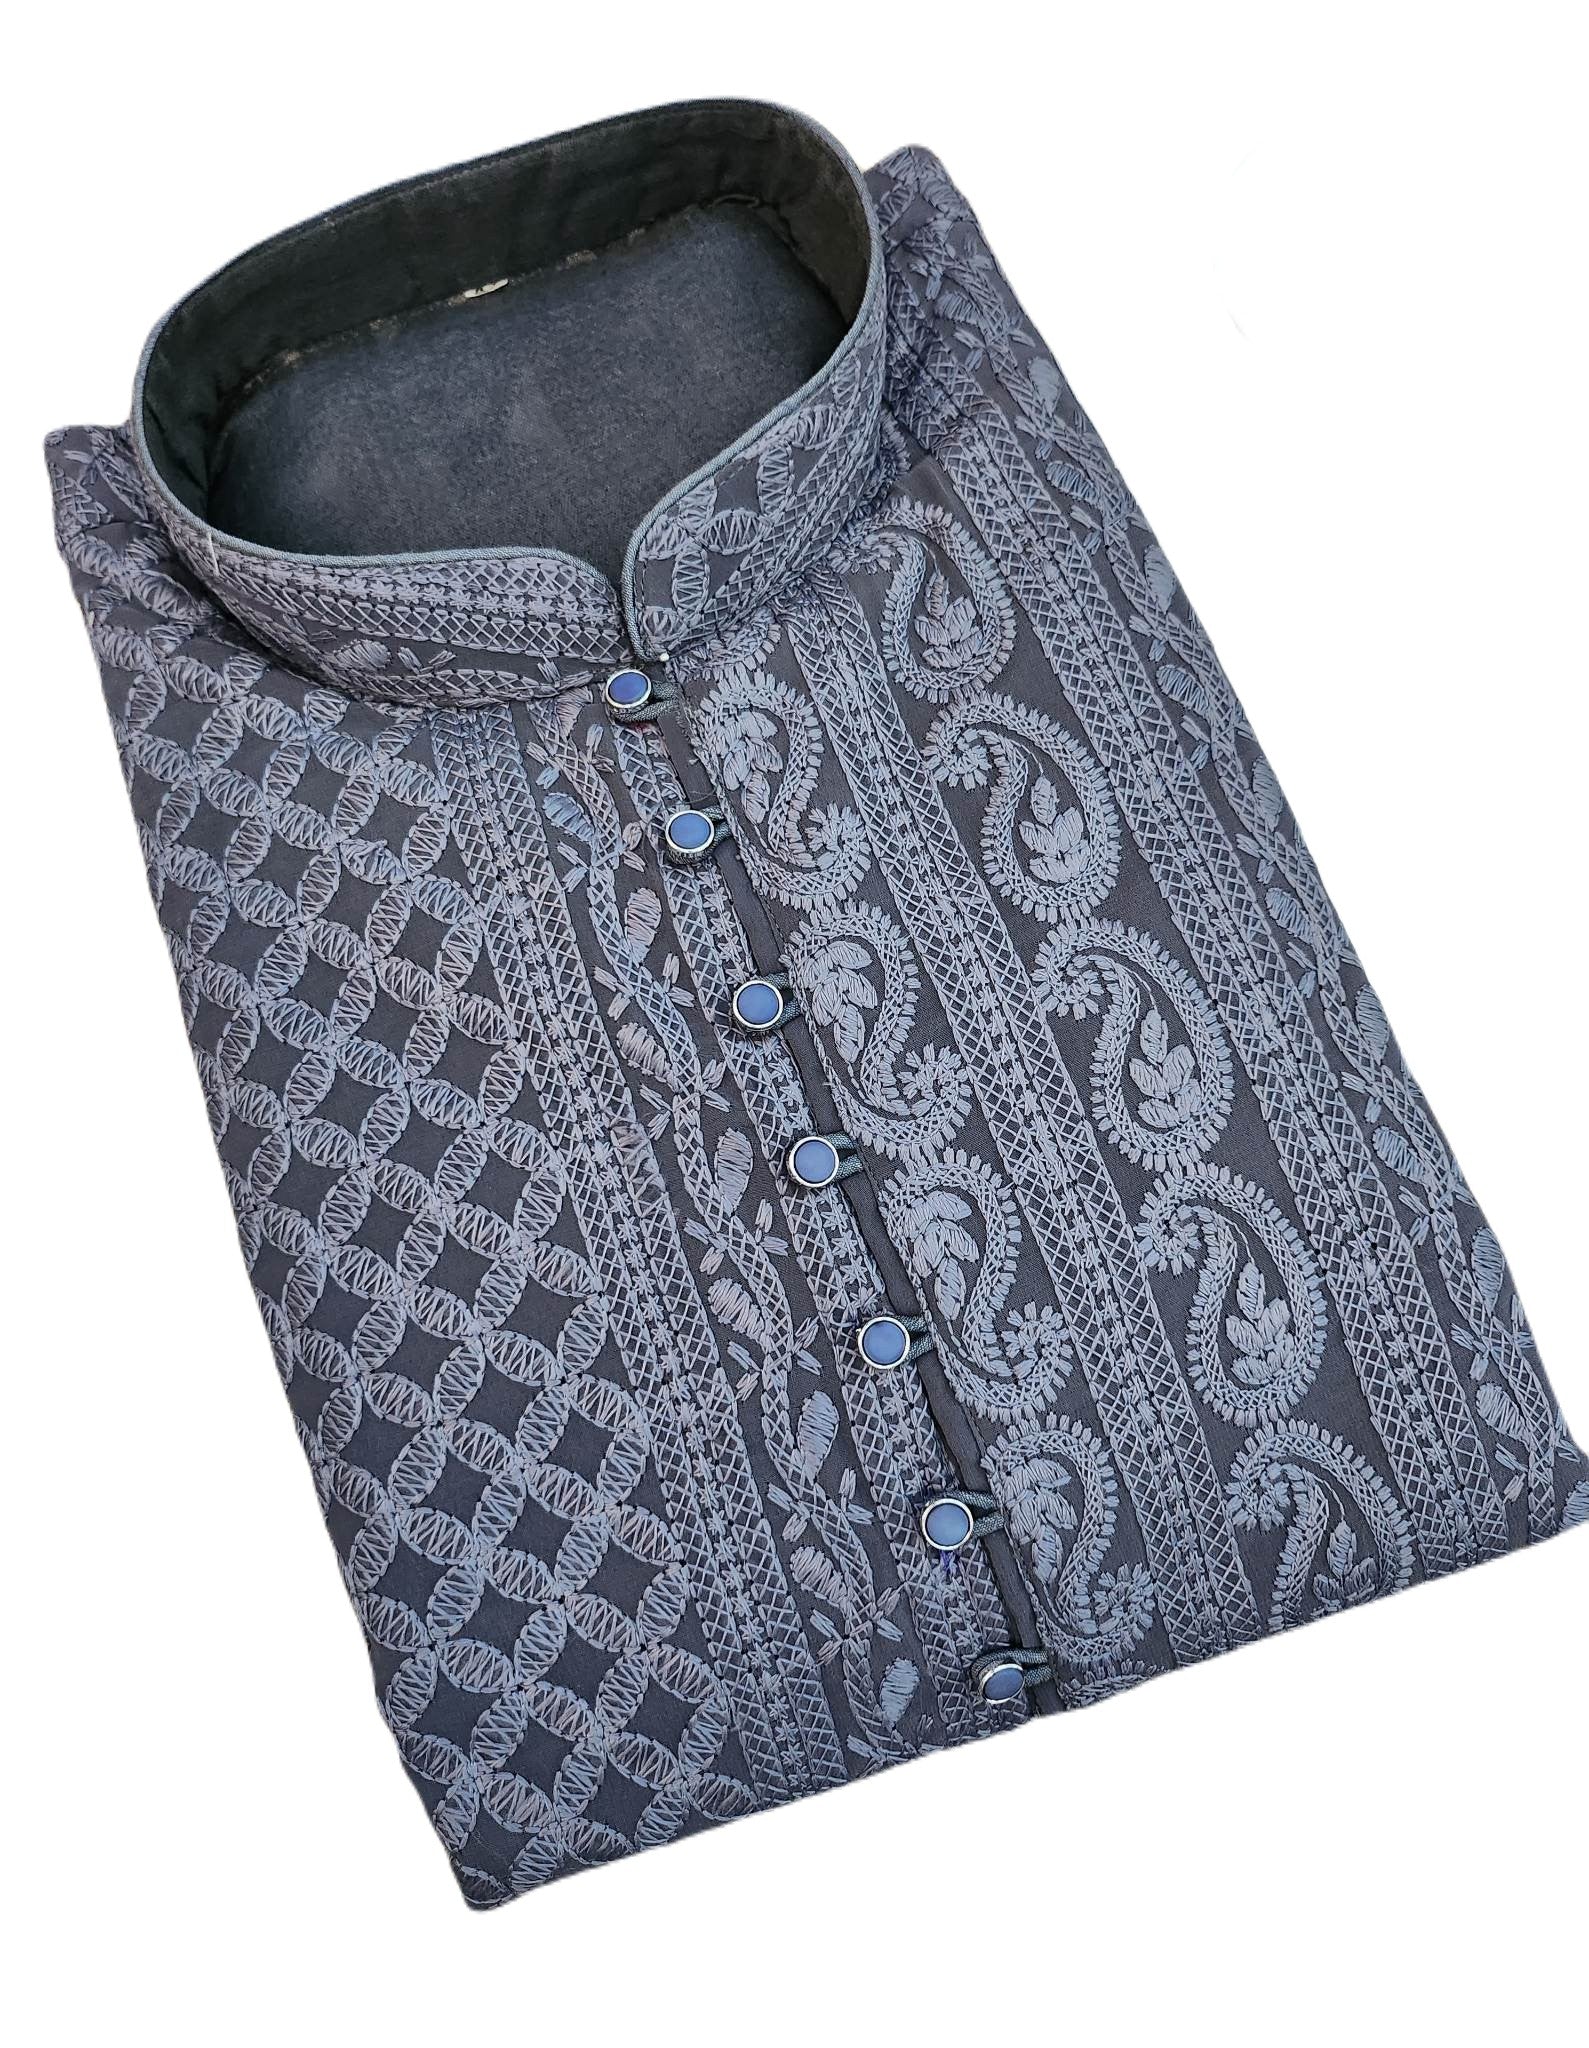 Striking Gray Shade Kurta Pajama Set, Georgette with Intricate Chikankari Embroidery, KP- 1058